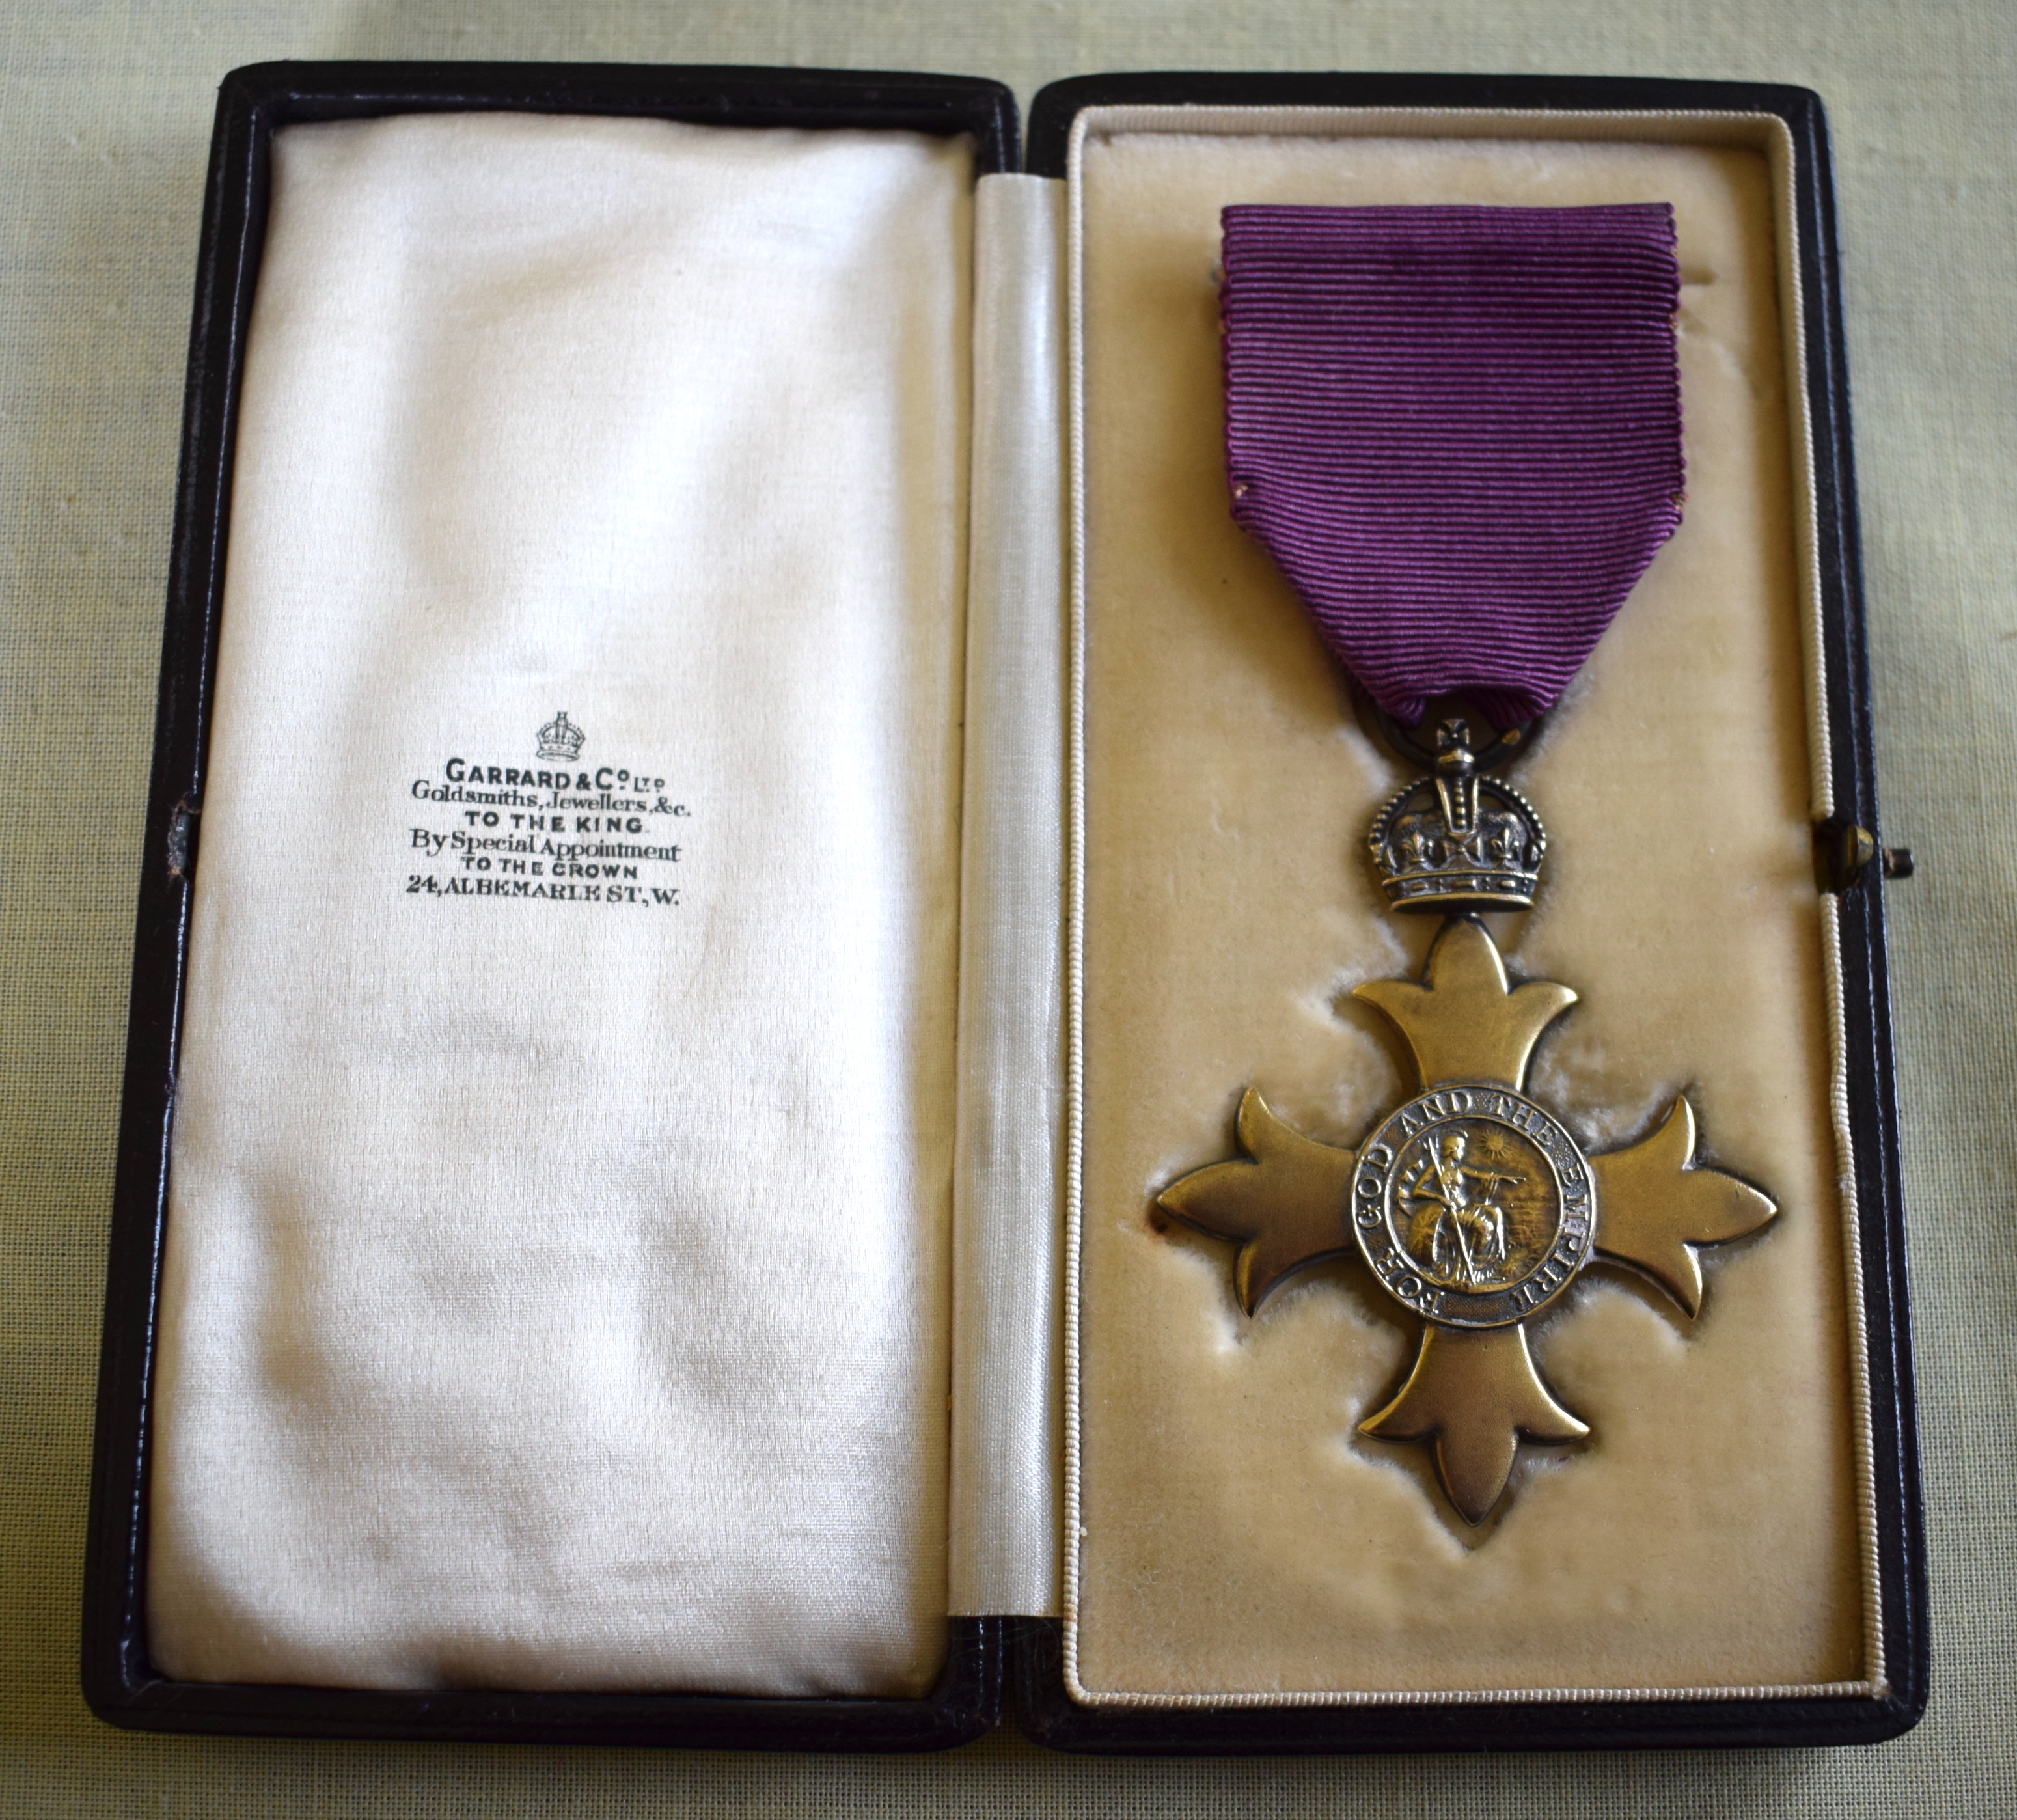 A GEORGE V SILVER GILT CASED OBE MEDAL in original fitted case. Medal 6.5 cm x 4.5 cm.